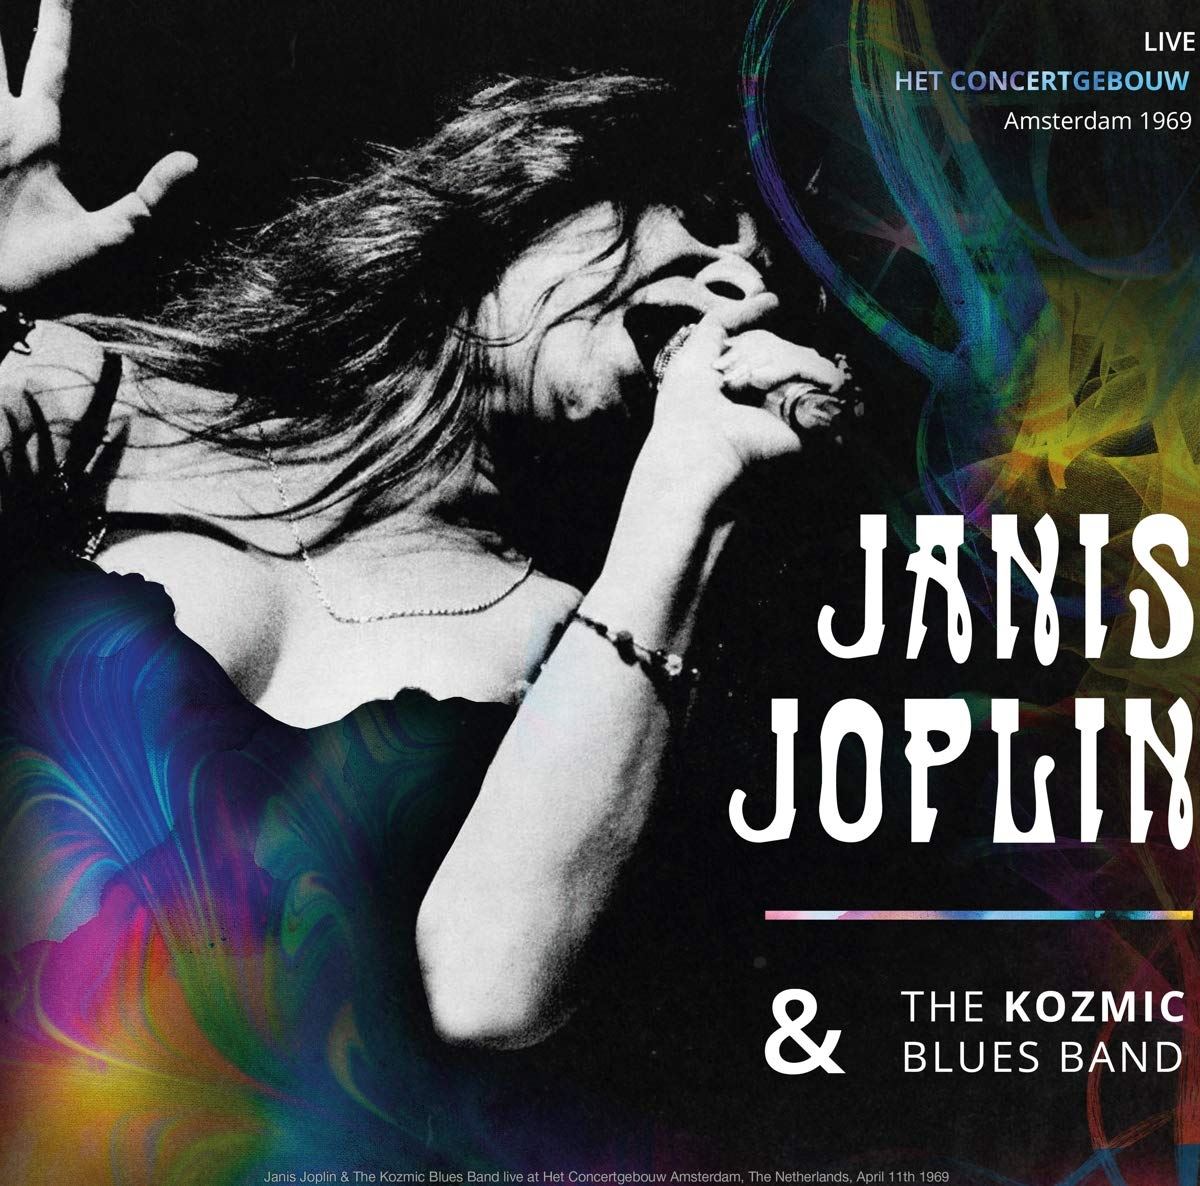 Janis Joplin & The Kozmic Blues Band - Live At Het Concertgebouw Amsterdam 1969 - Vinyl